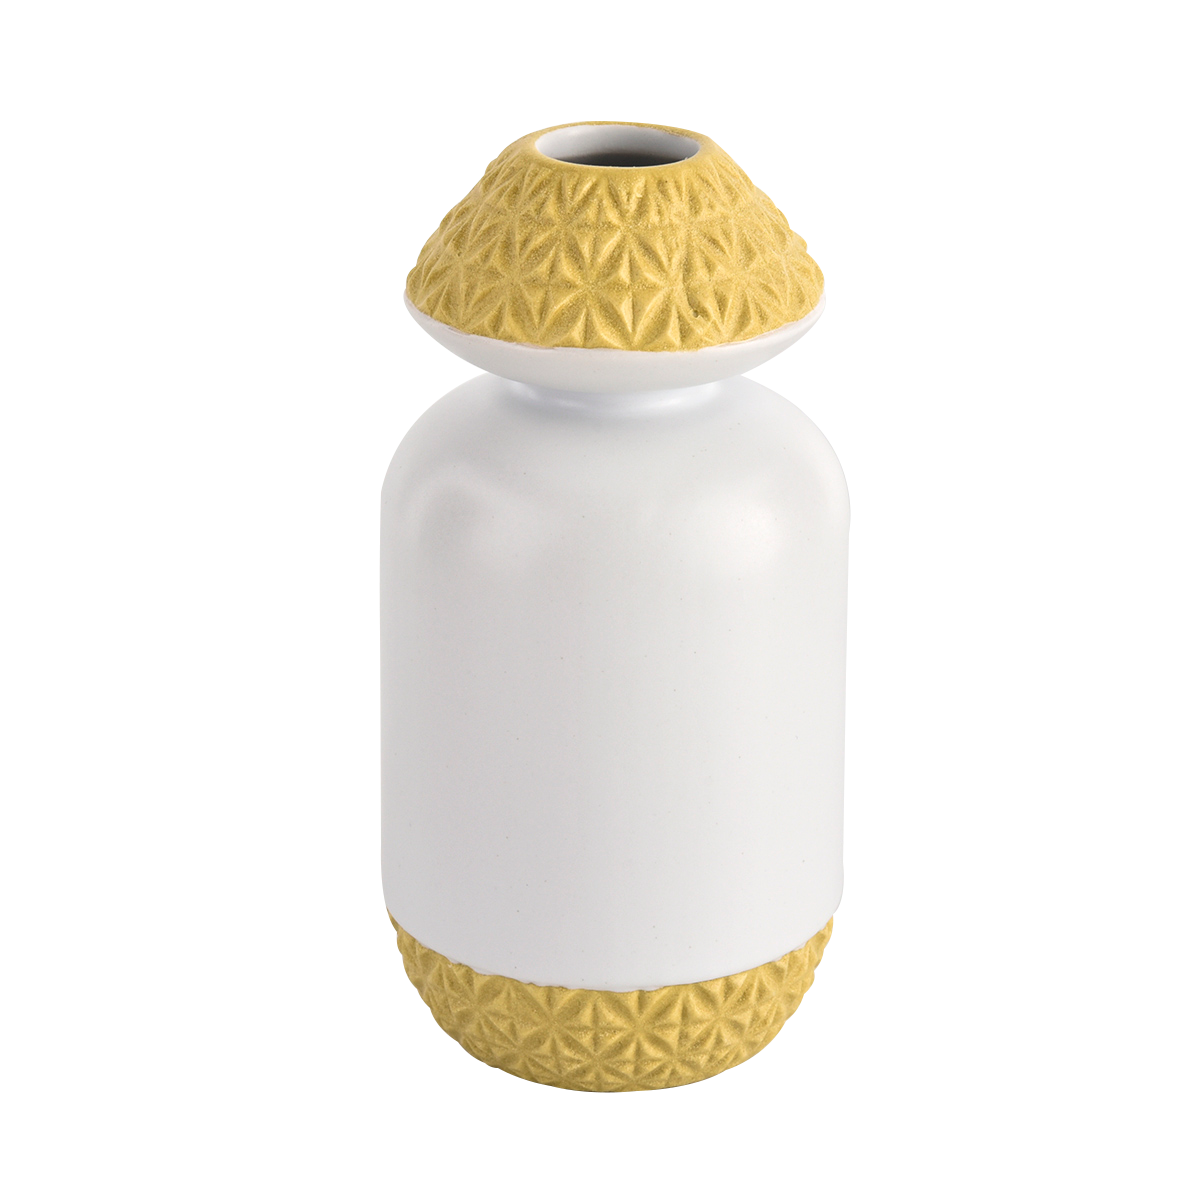 Botol penyebar seramik logo tersuai botol penyebar aroma